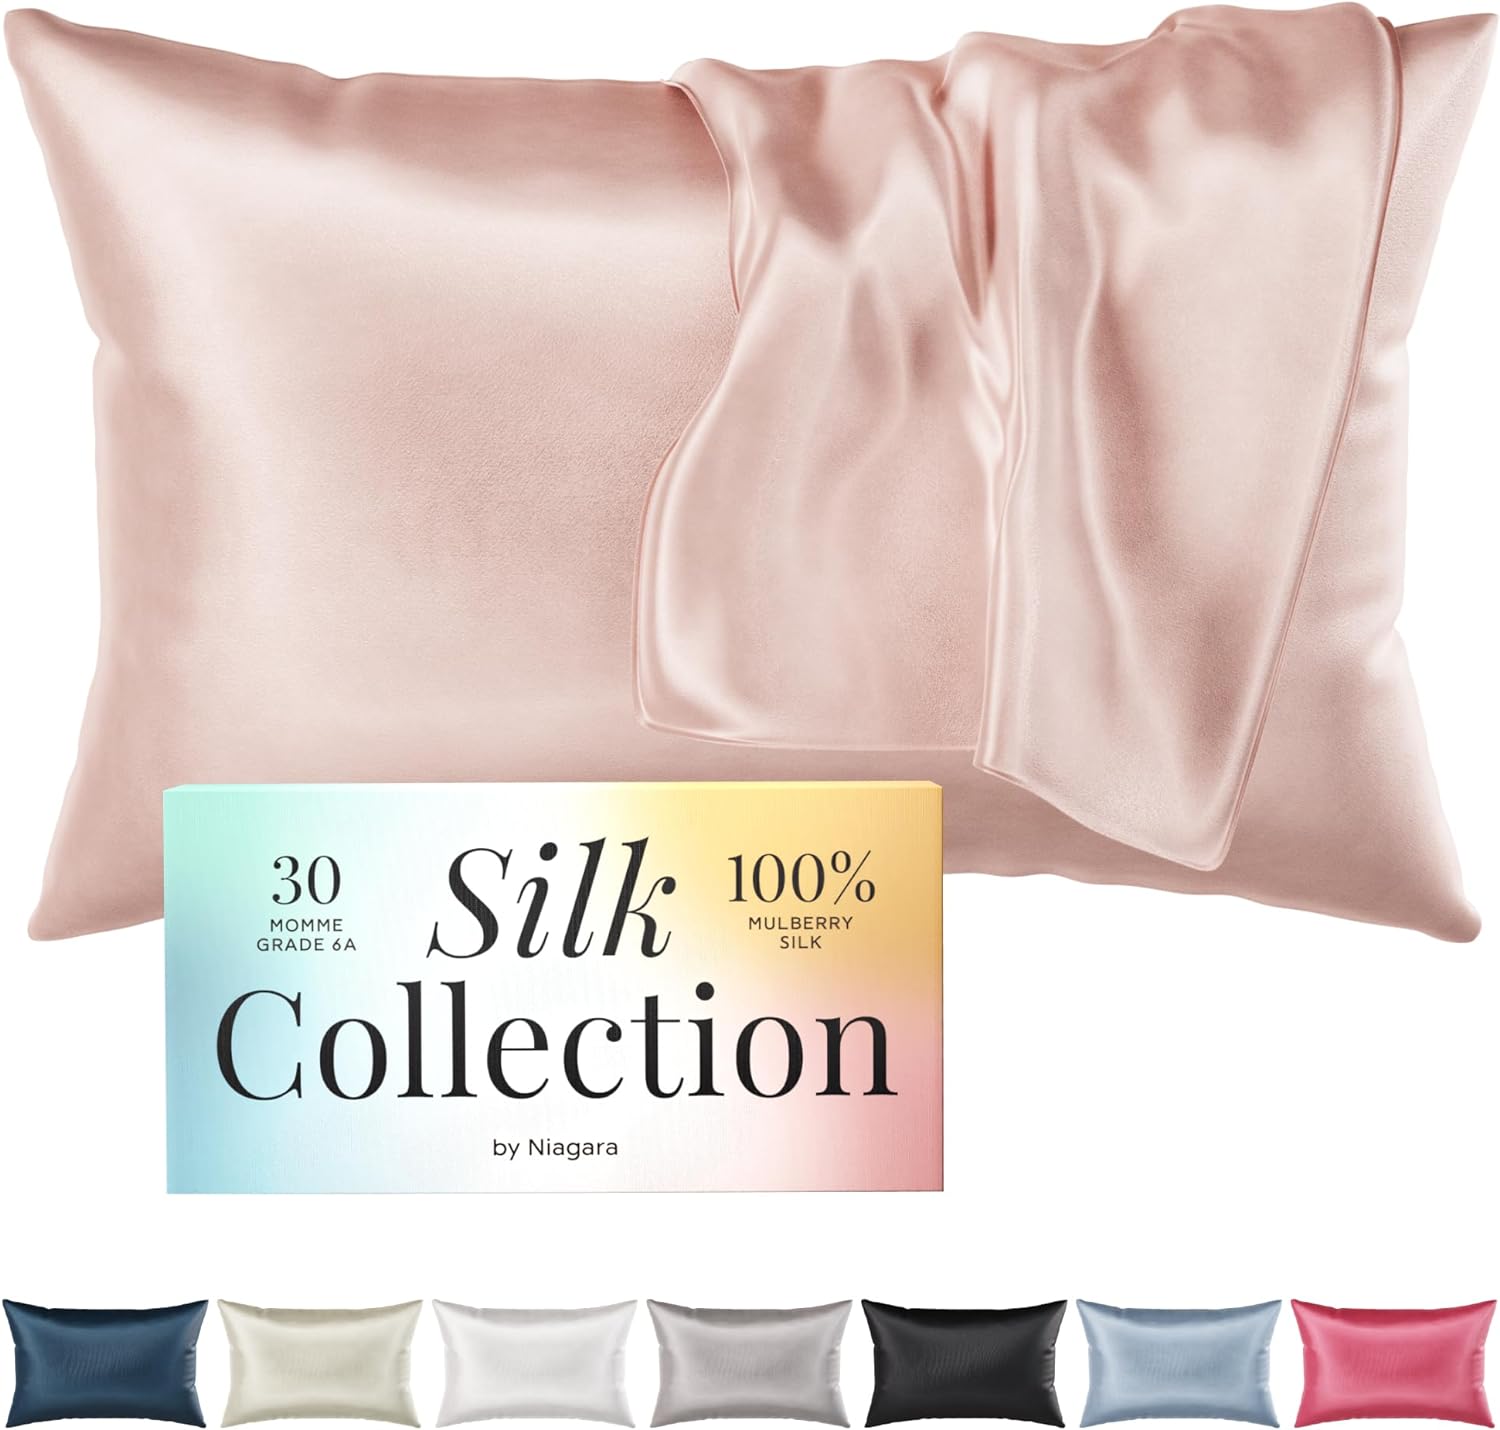 Niagara 100% Mulberry Silk Pillowcase - 30 Momme Silk Pillow case for Hair and Skin - Grade 6A Silk Pillow Cases with Zipper - Soft & Cooling Pink Silk Pillowcase Queen Size (20x30)